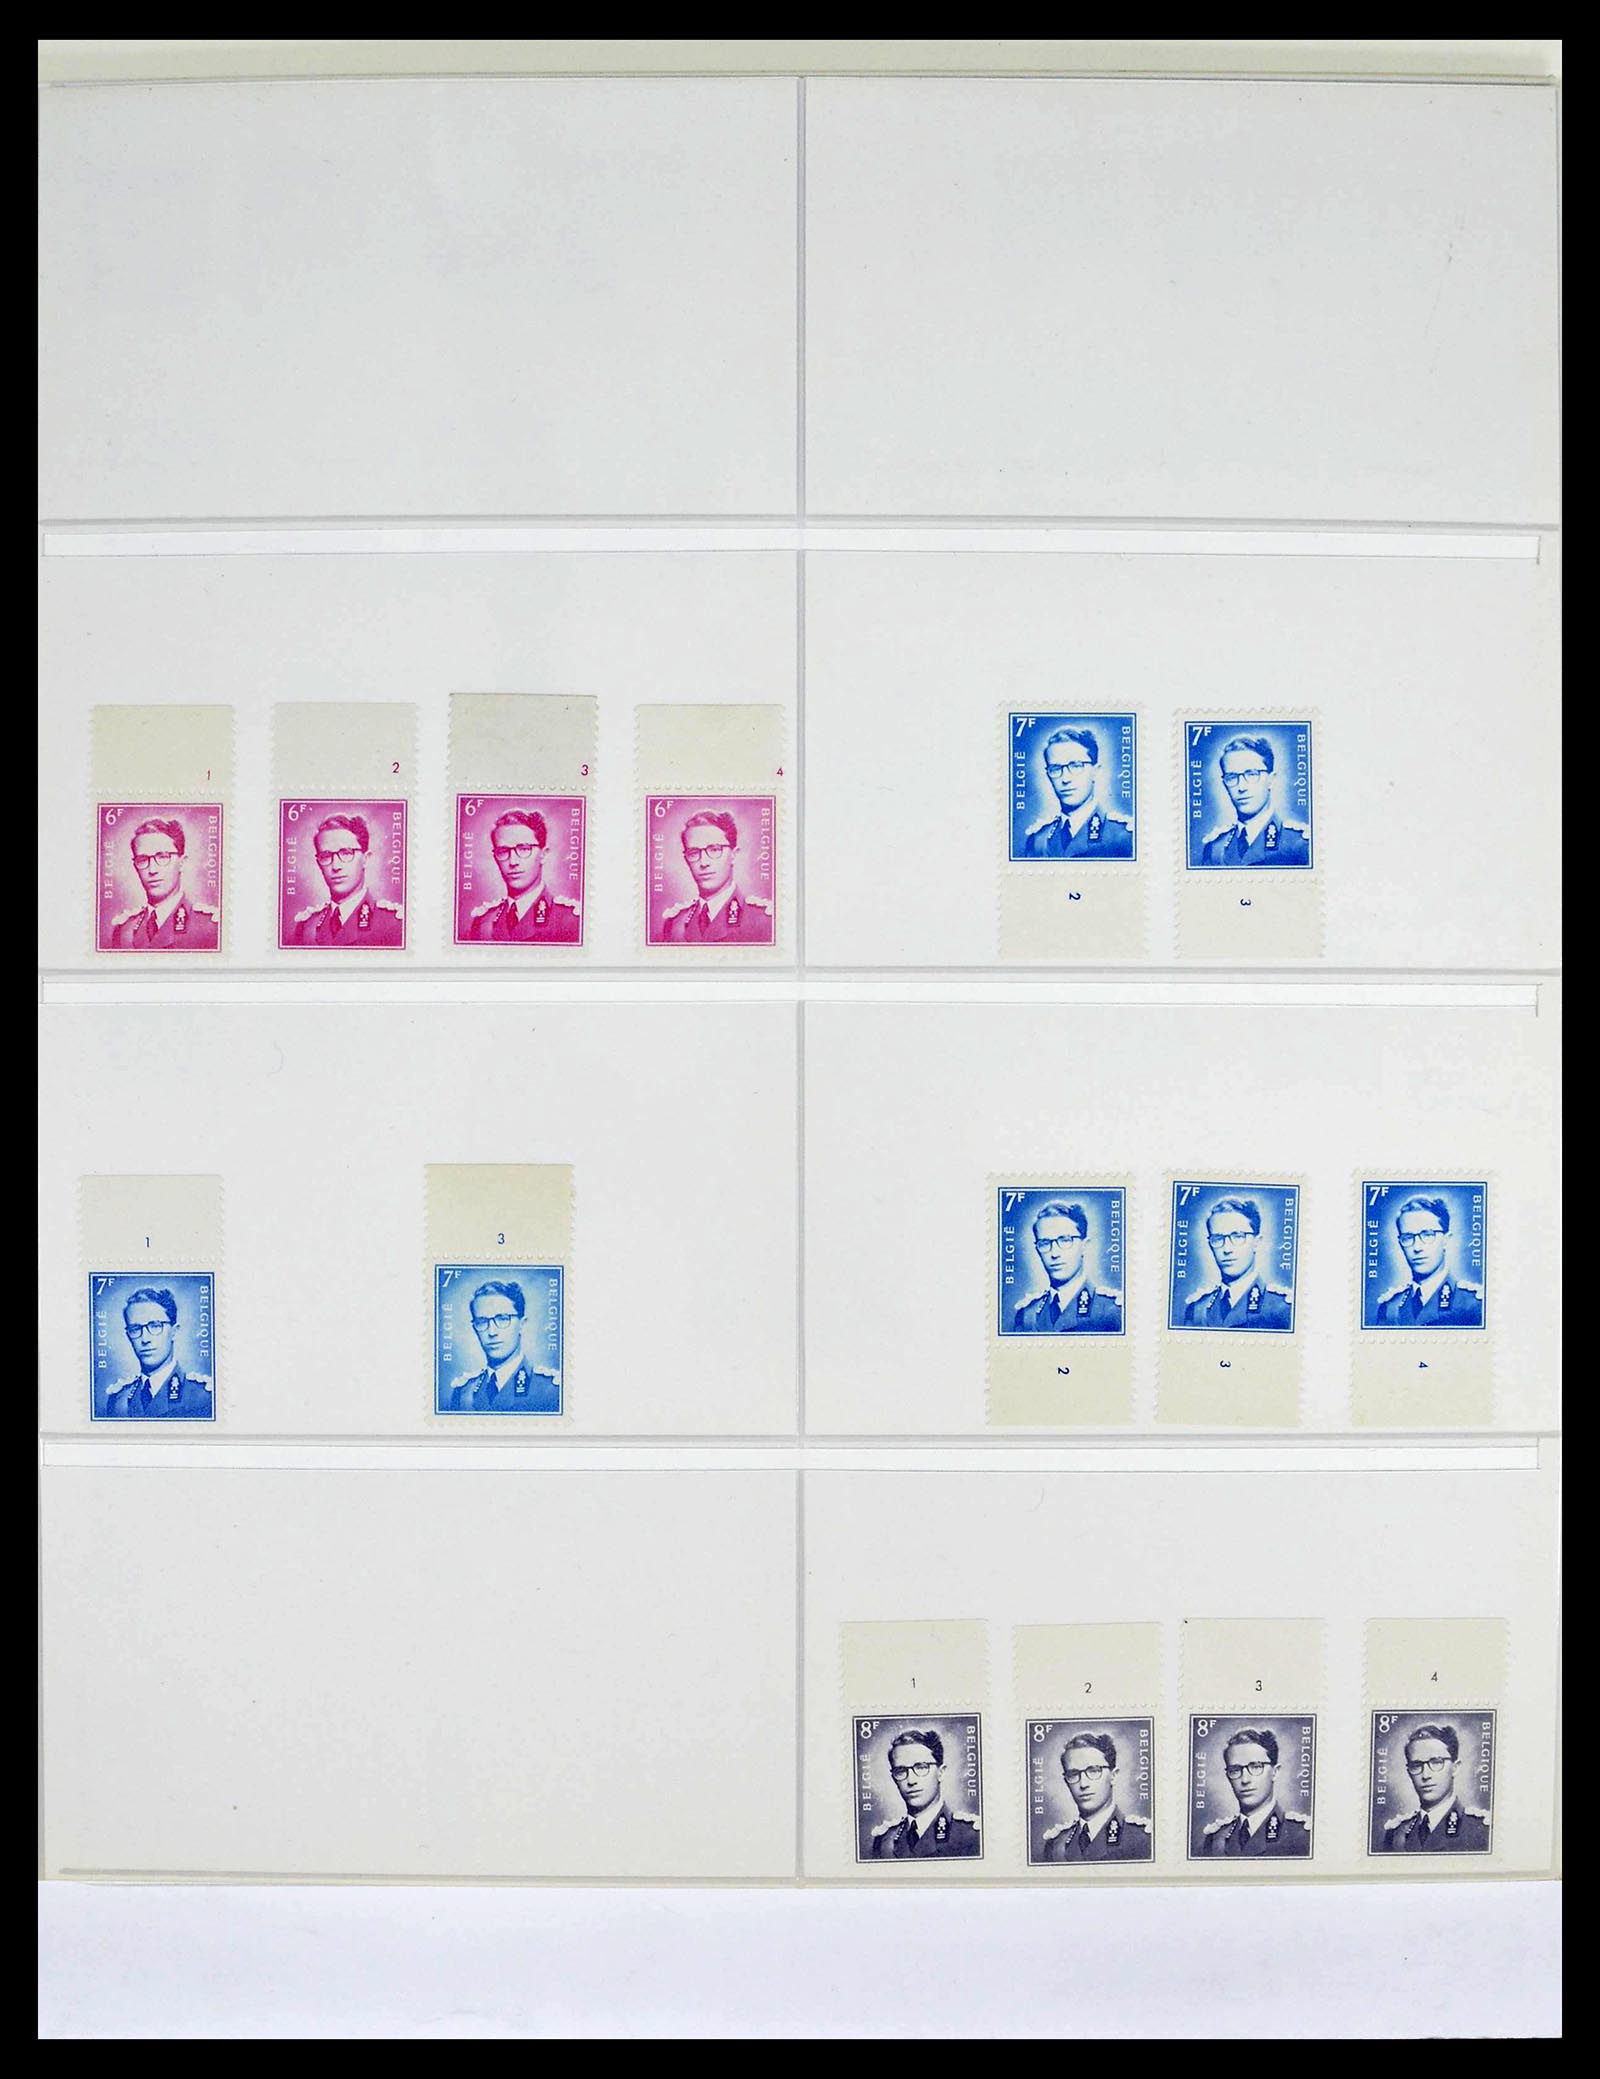 39229 0021 - Stamp collection 39229 Belgium Boudewijn with glasses 1952-1975.